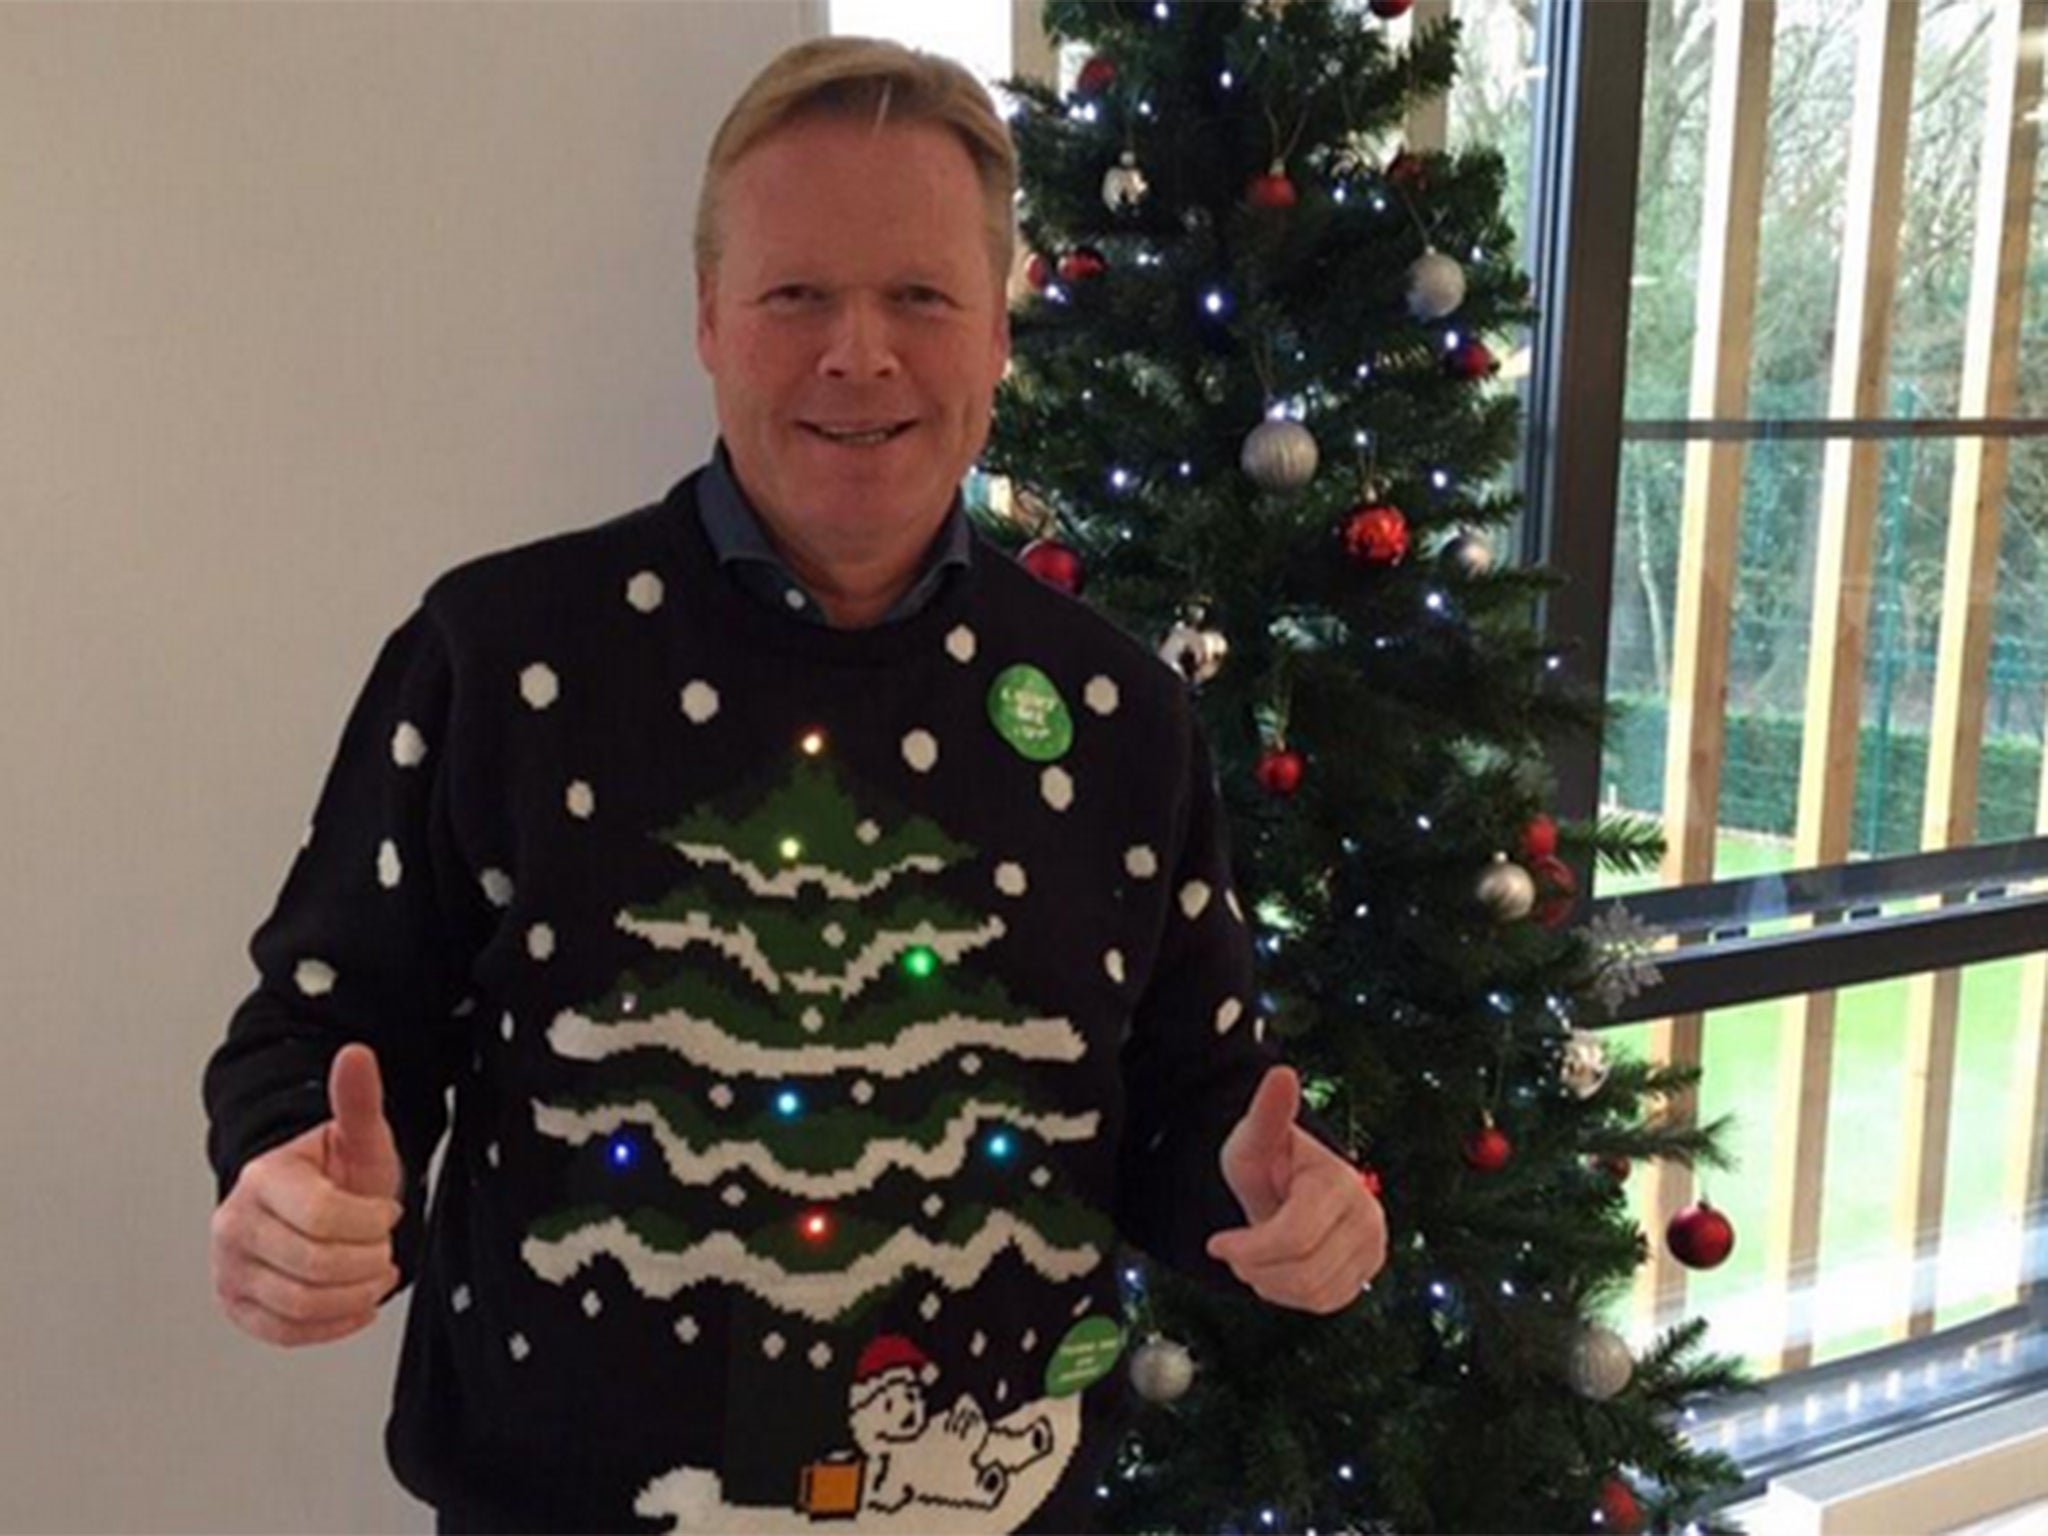 Ronald Koeman poses in a Christmas jumper